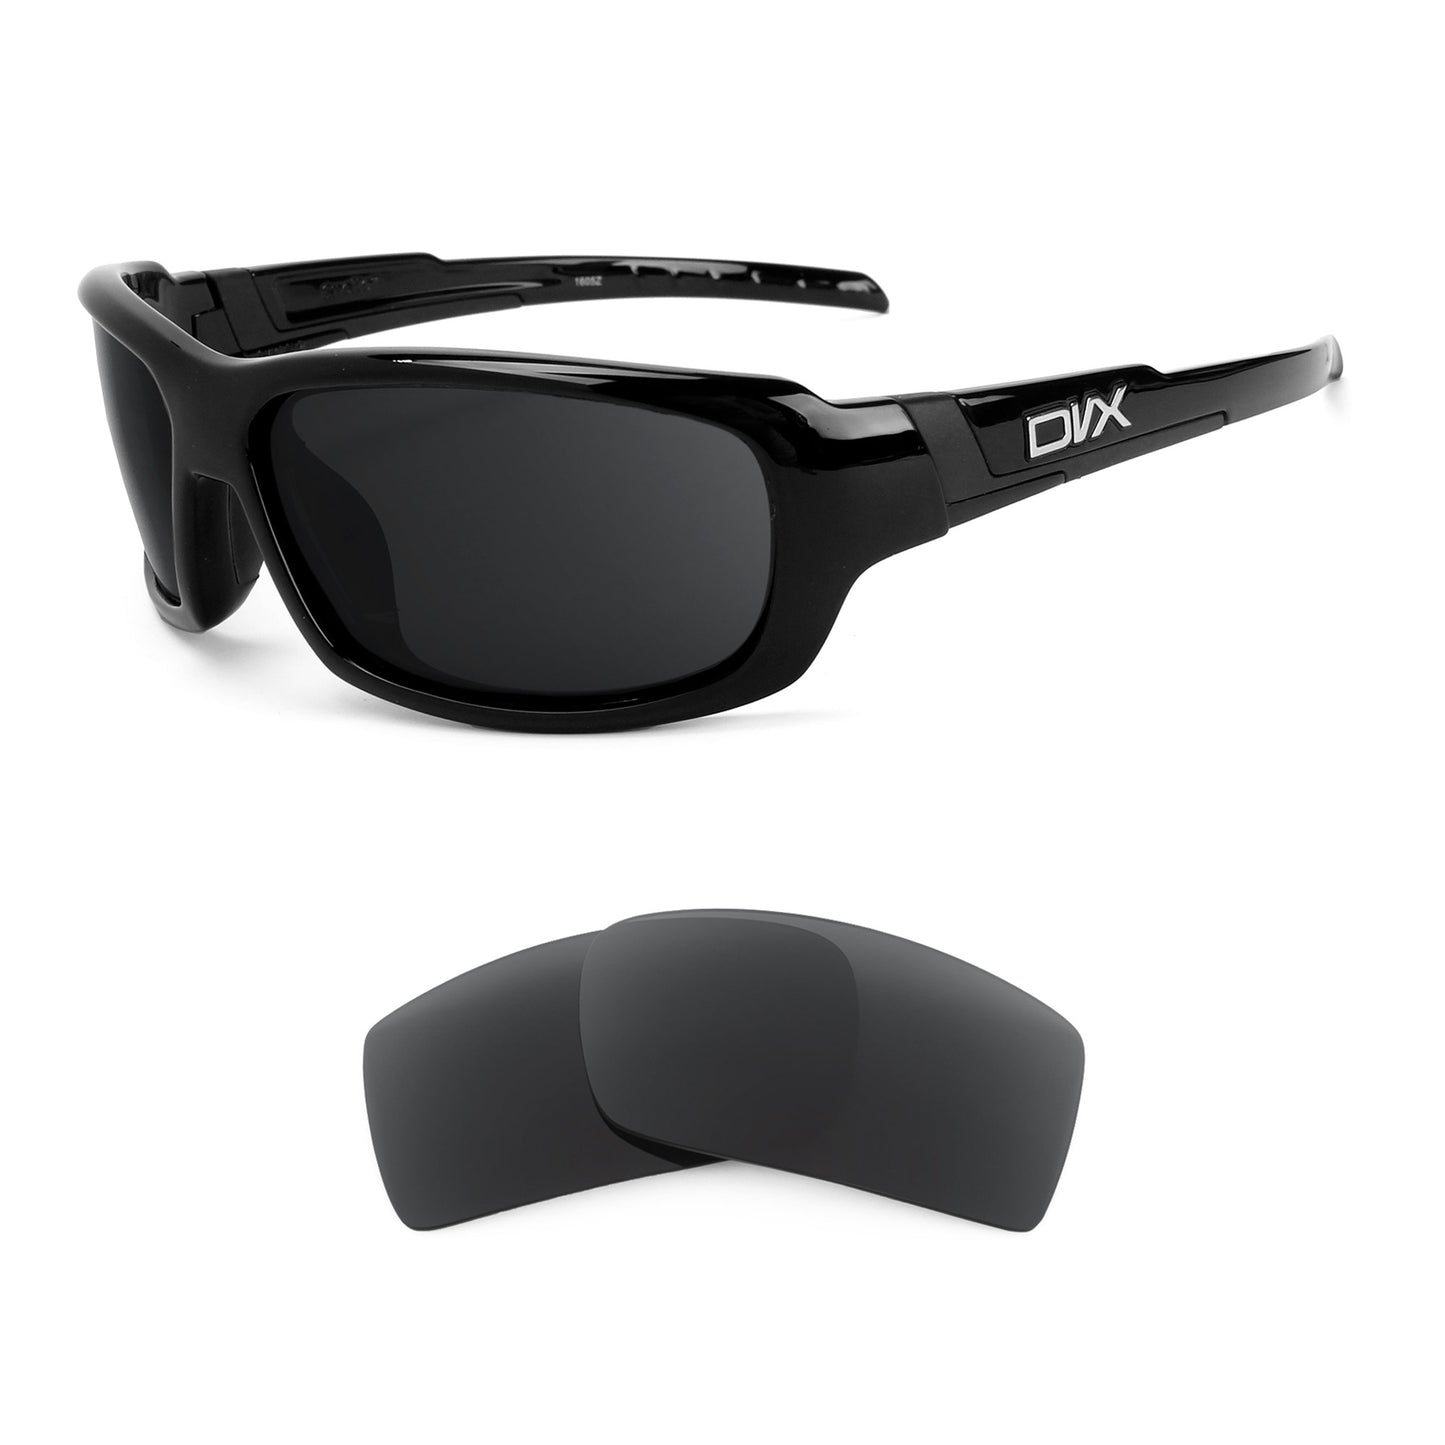 DVX Eyewear Spoiler sunglasses with replacement lenses